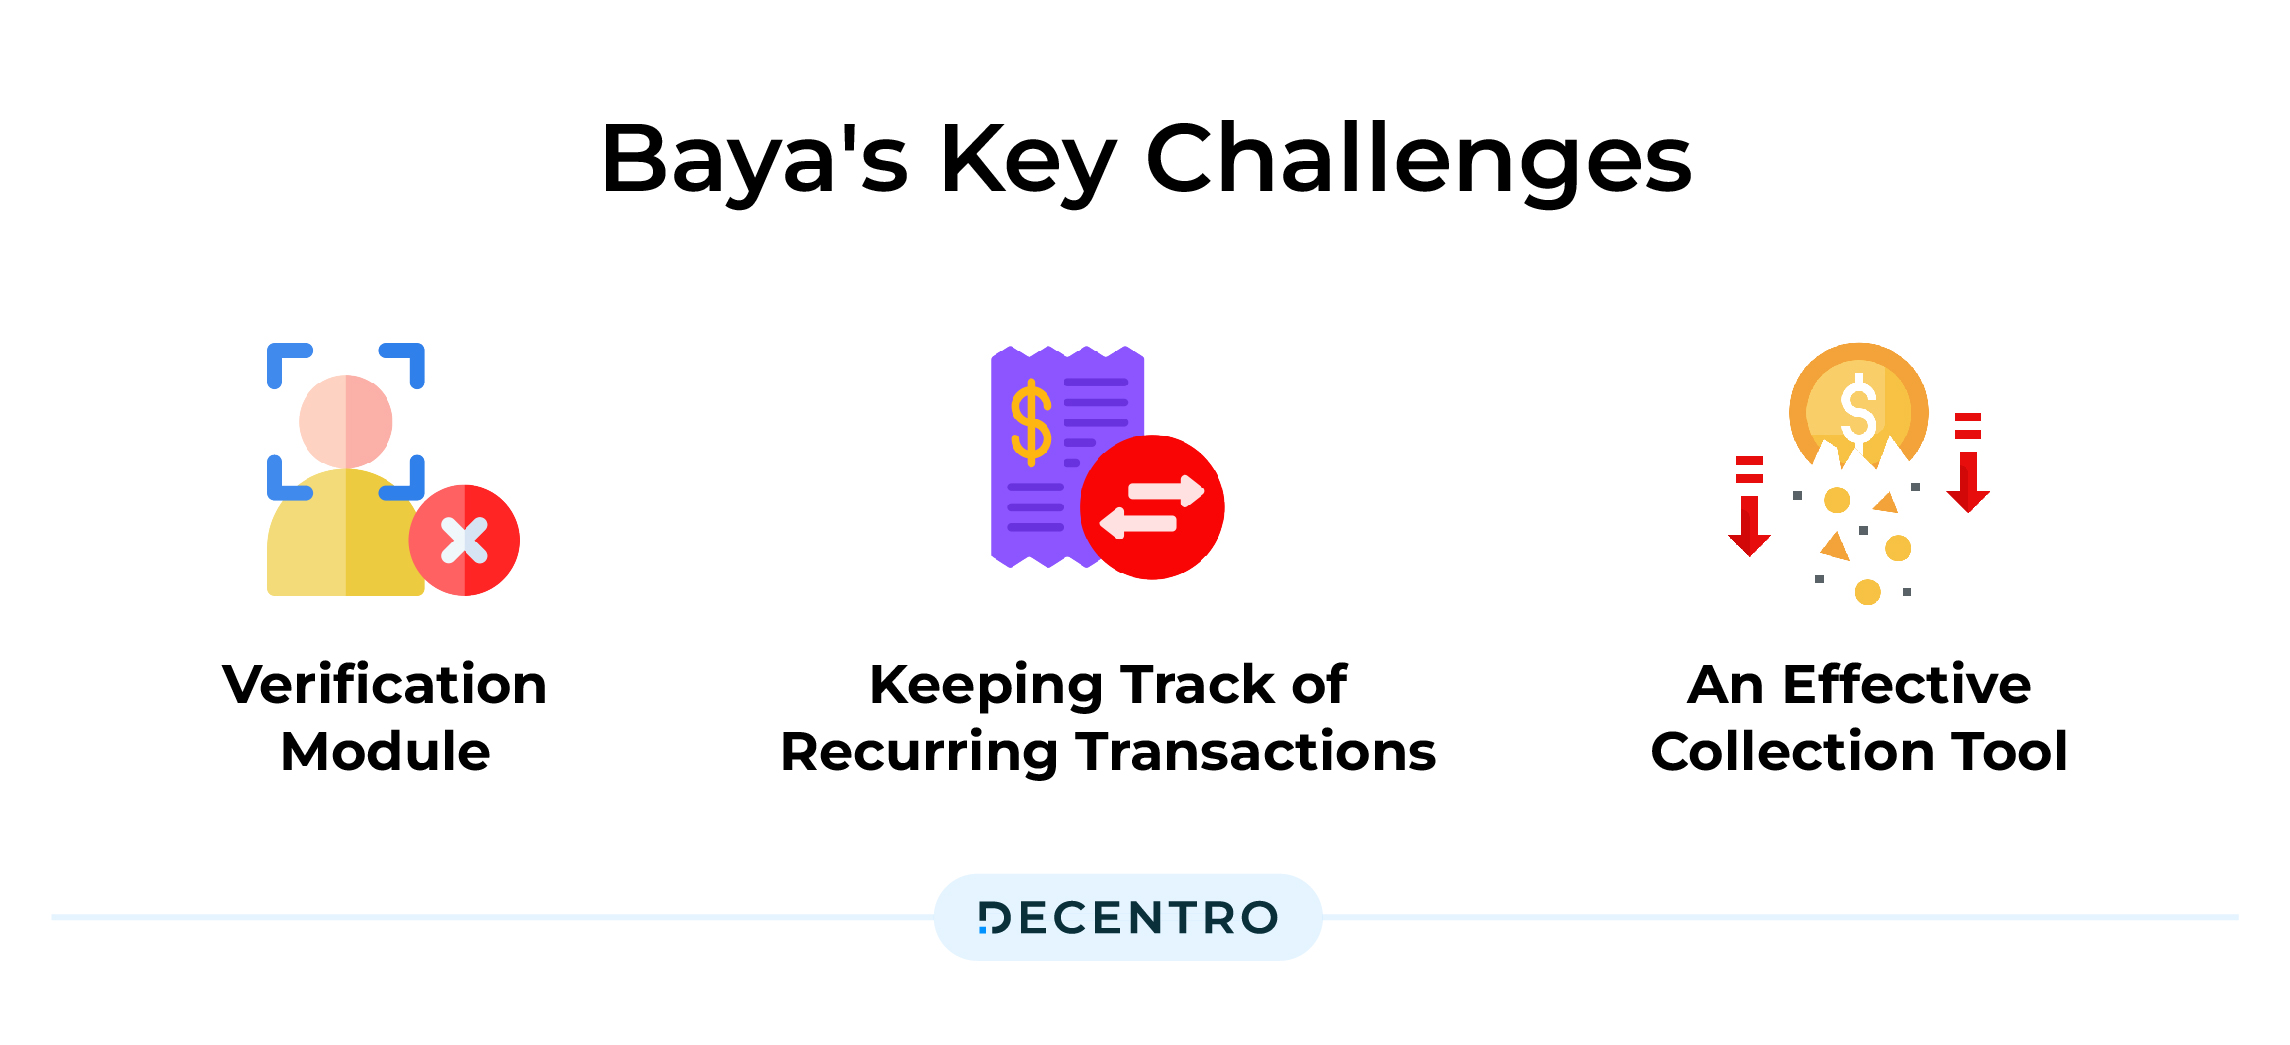 creative showcasing the key challenges Baya faced